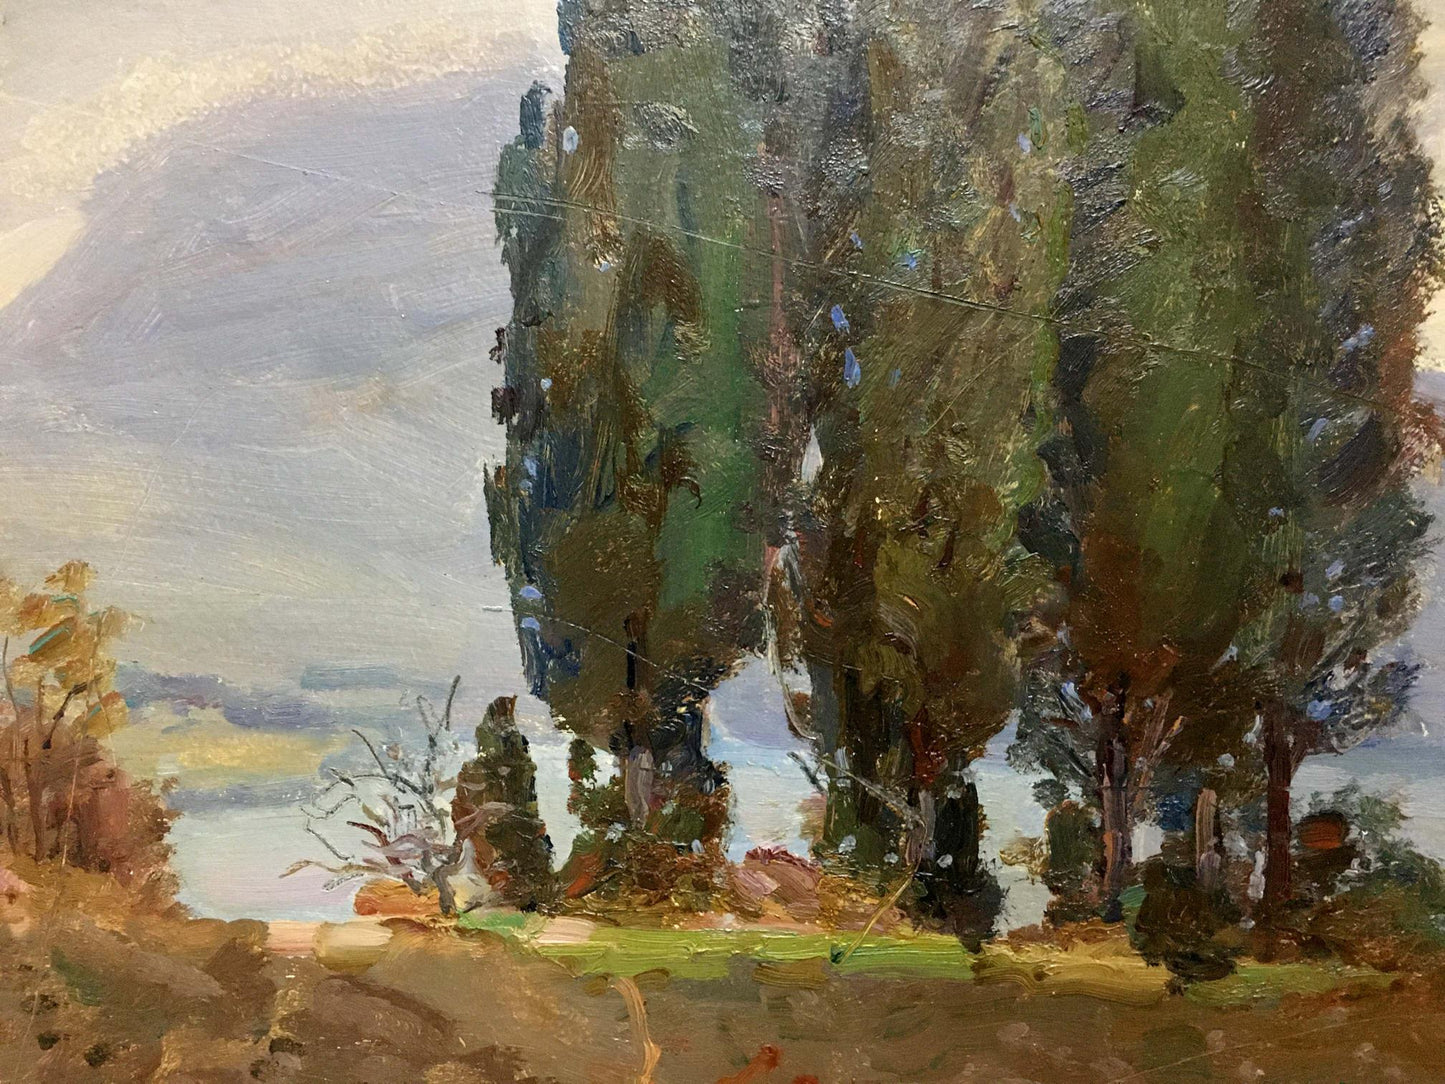 Oil painting Shore landscape I. V. Kisil